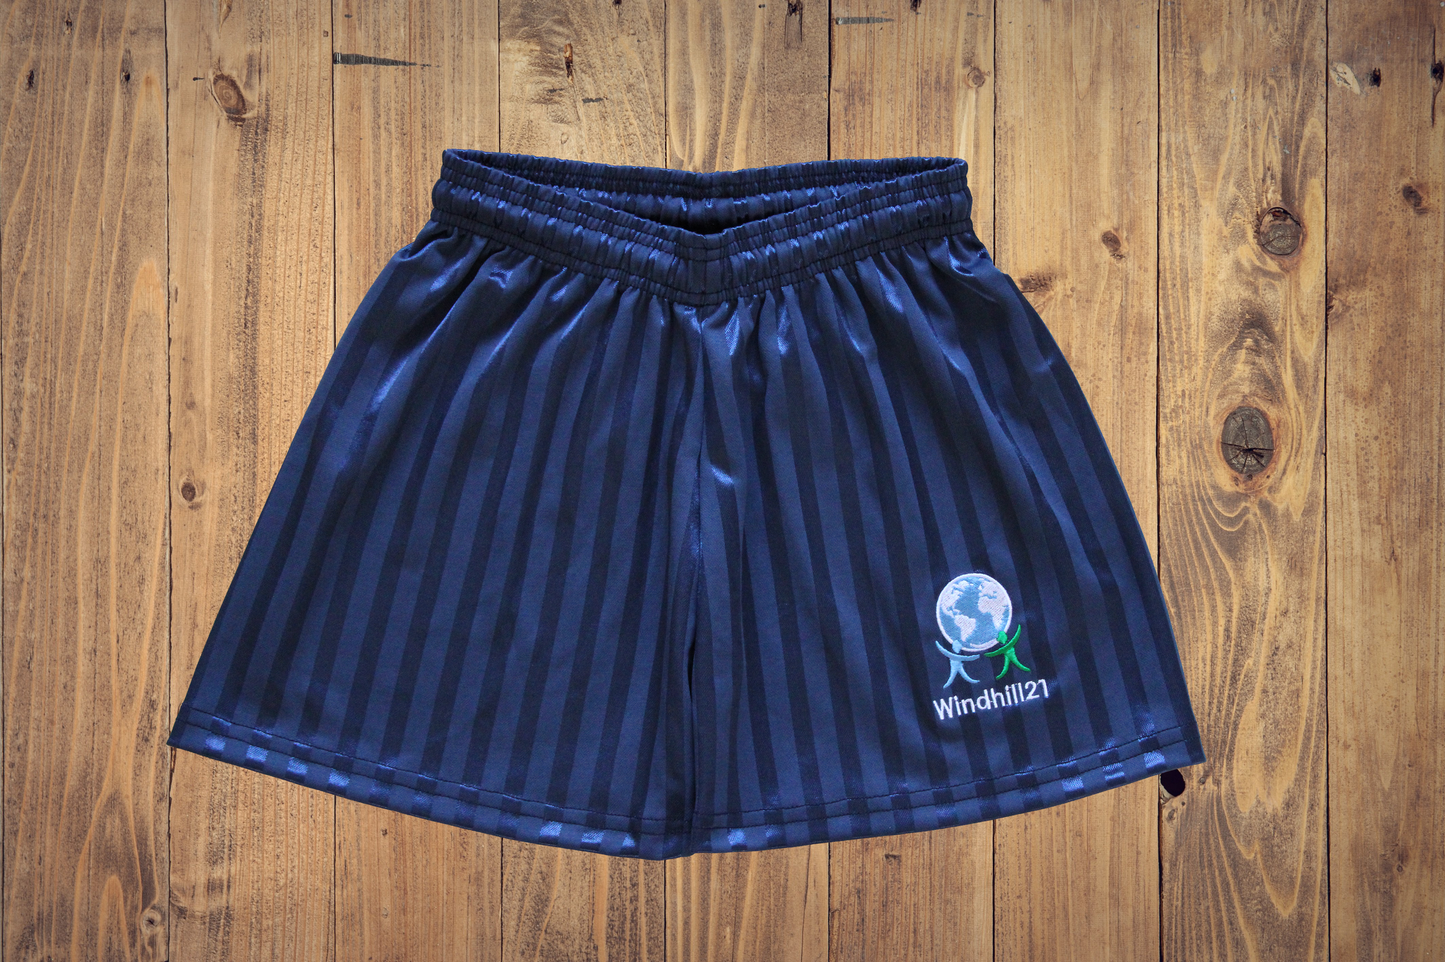 Windhill21 PE Shorts